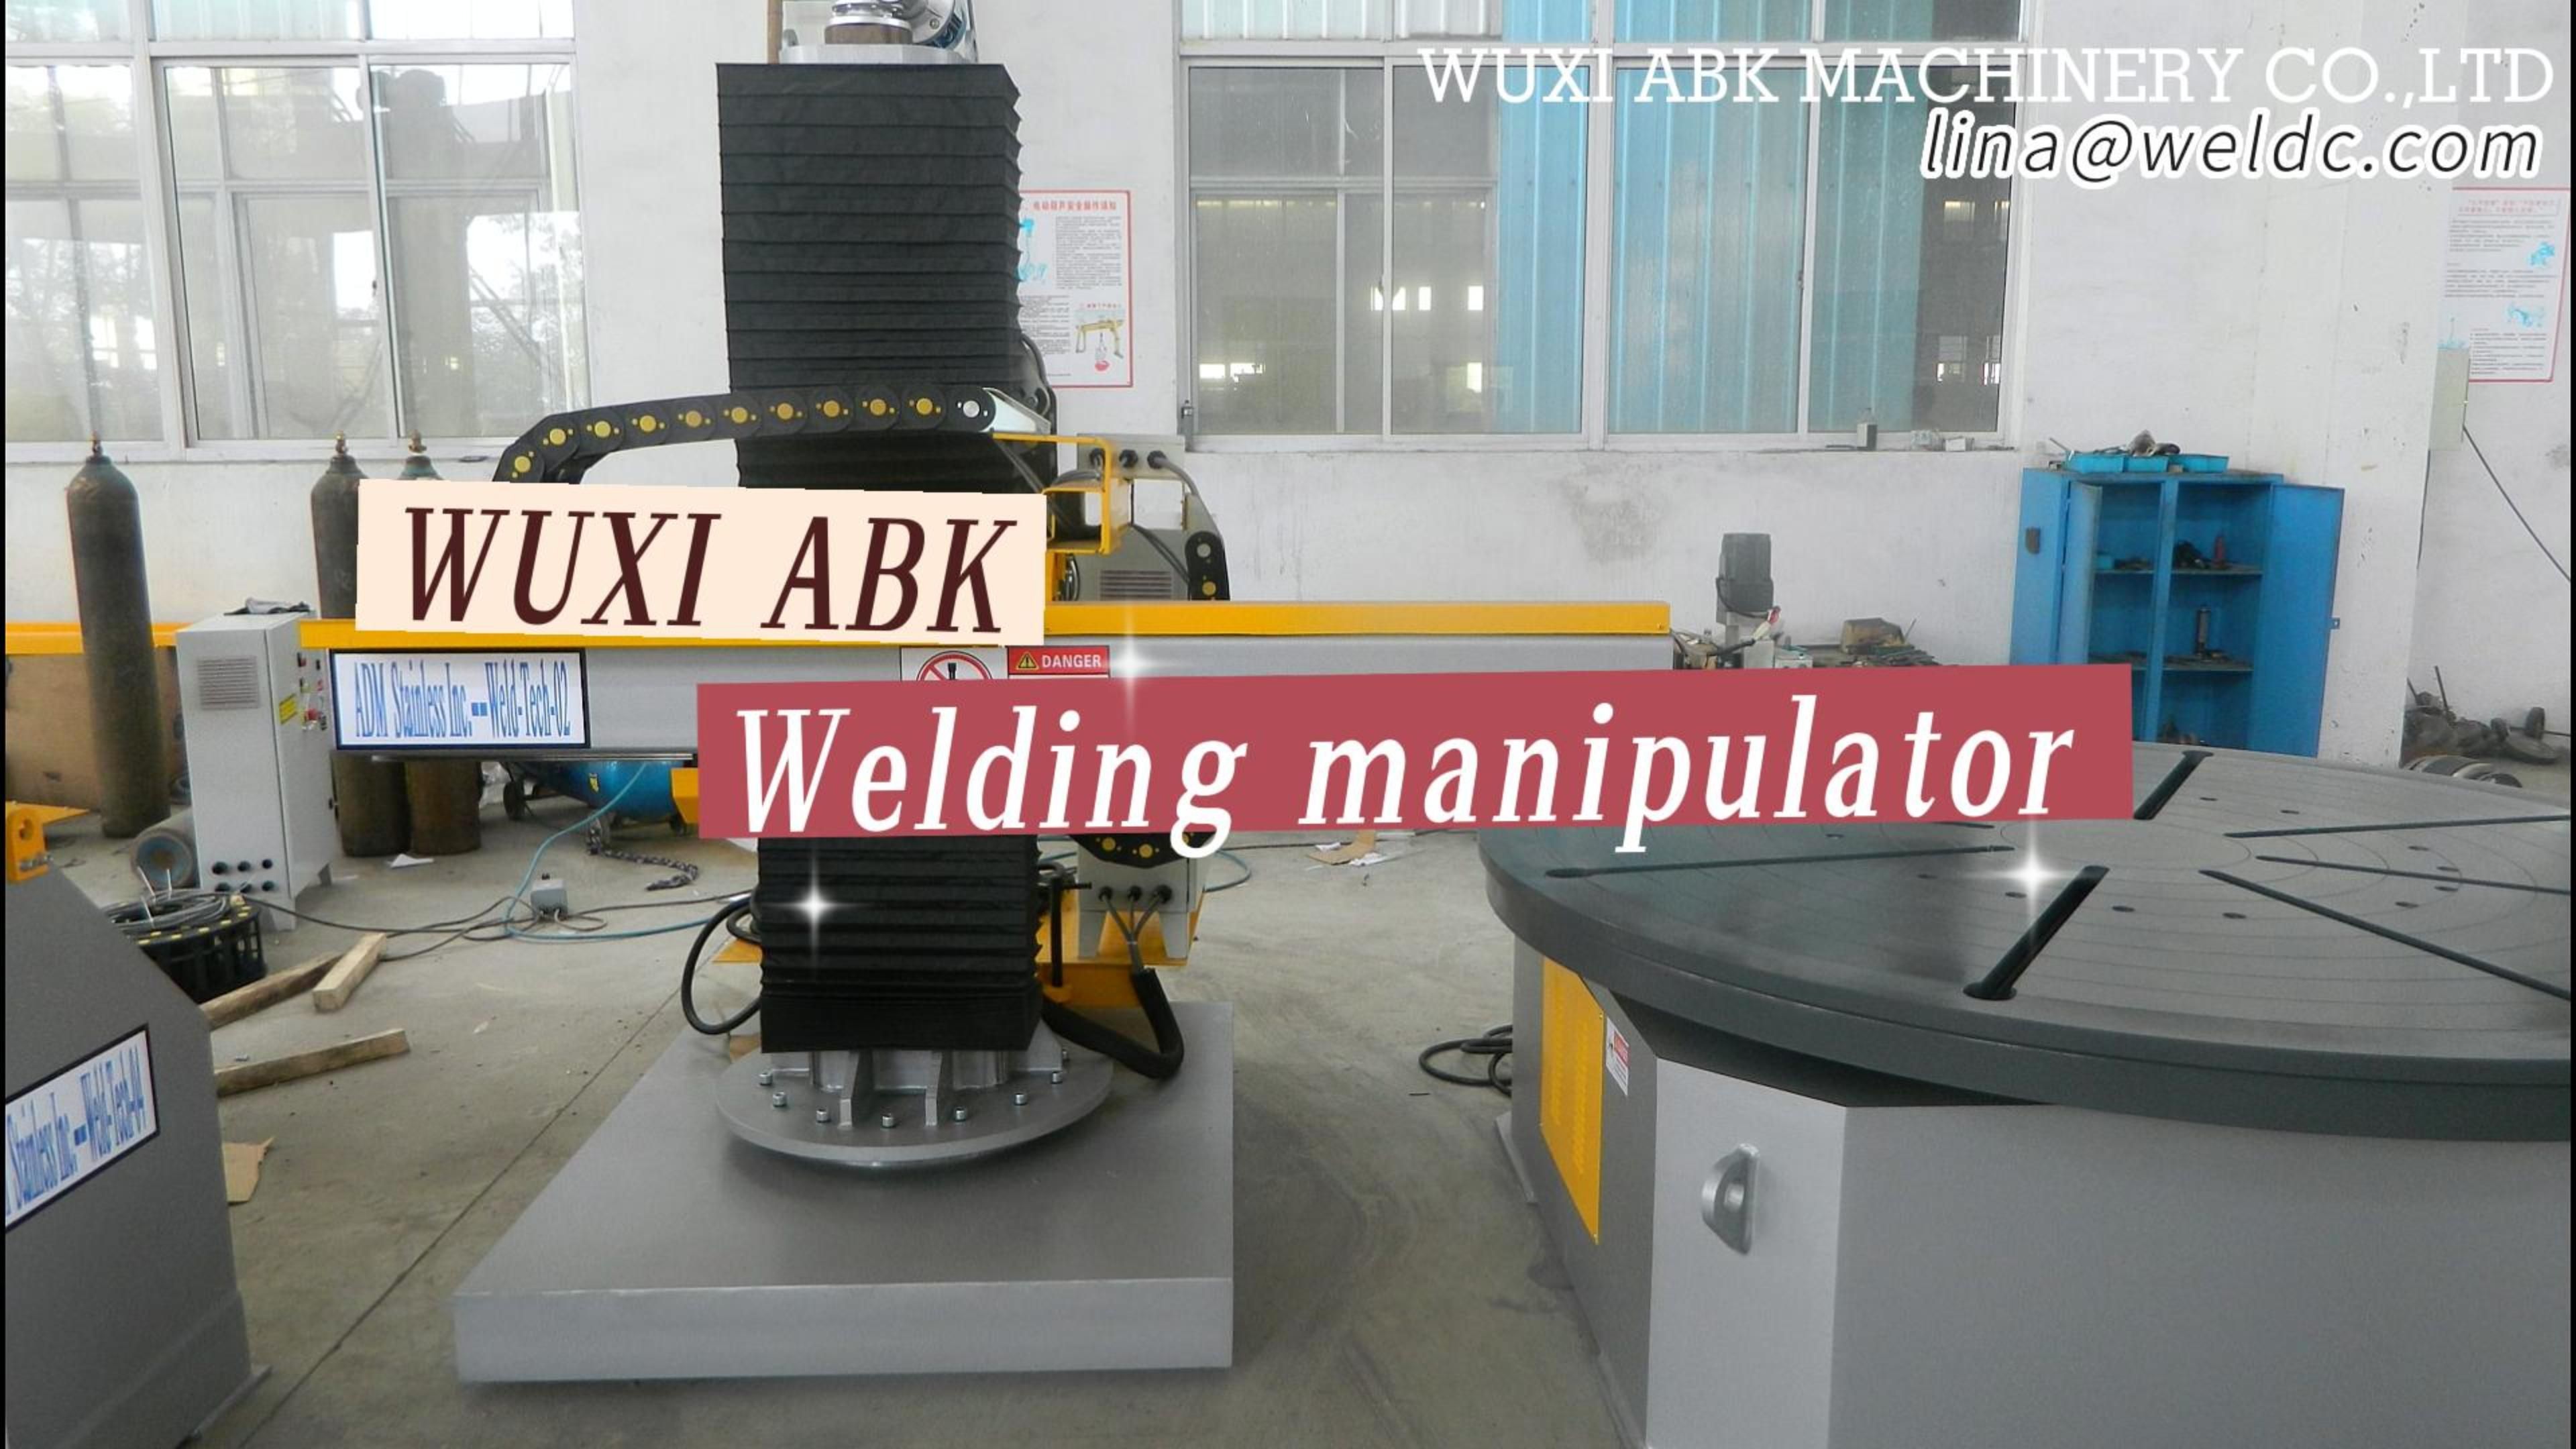 Revolutionary Welding Manipulator: welding manipulator pushes welding technology to a new height.